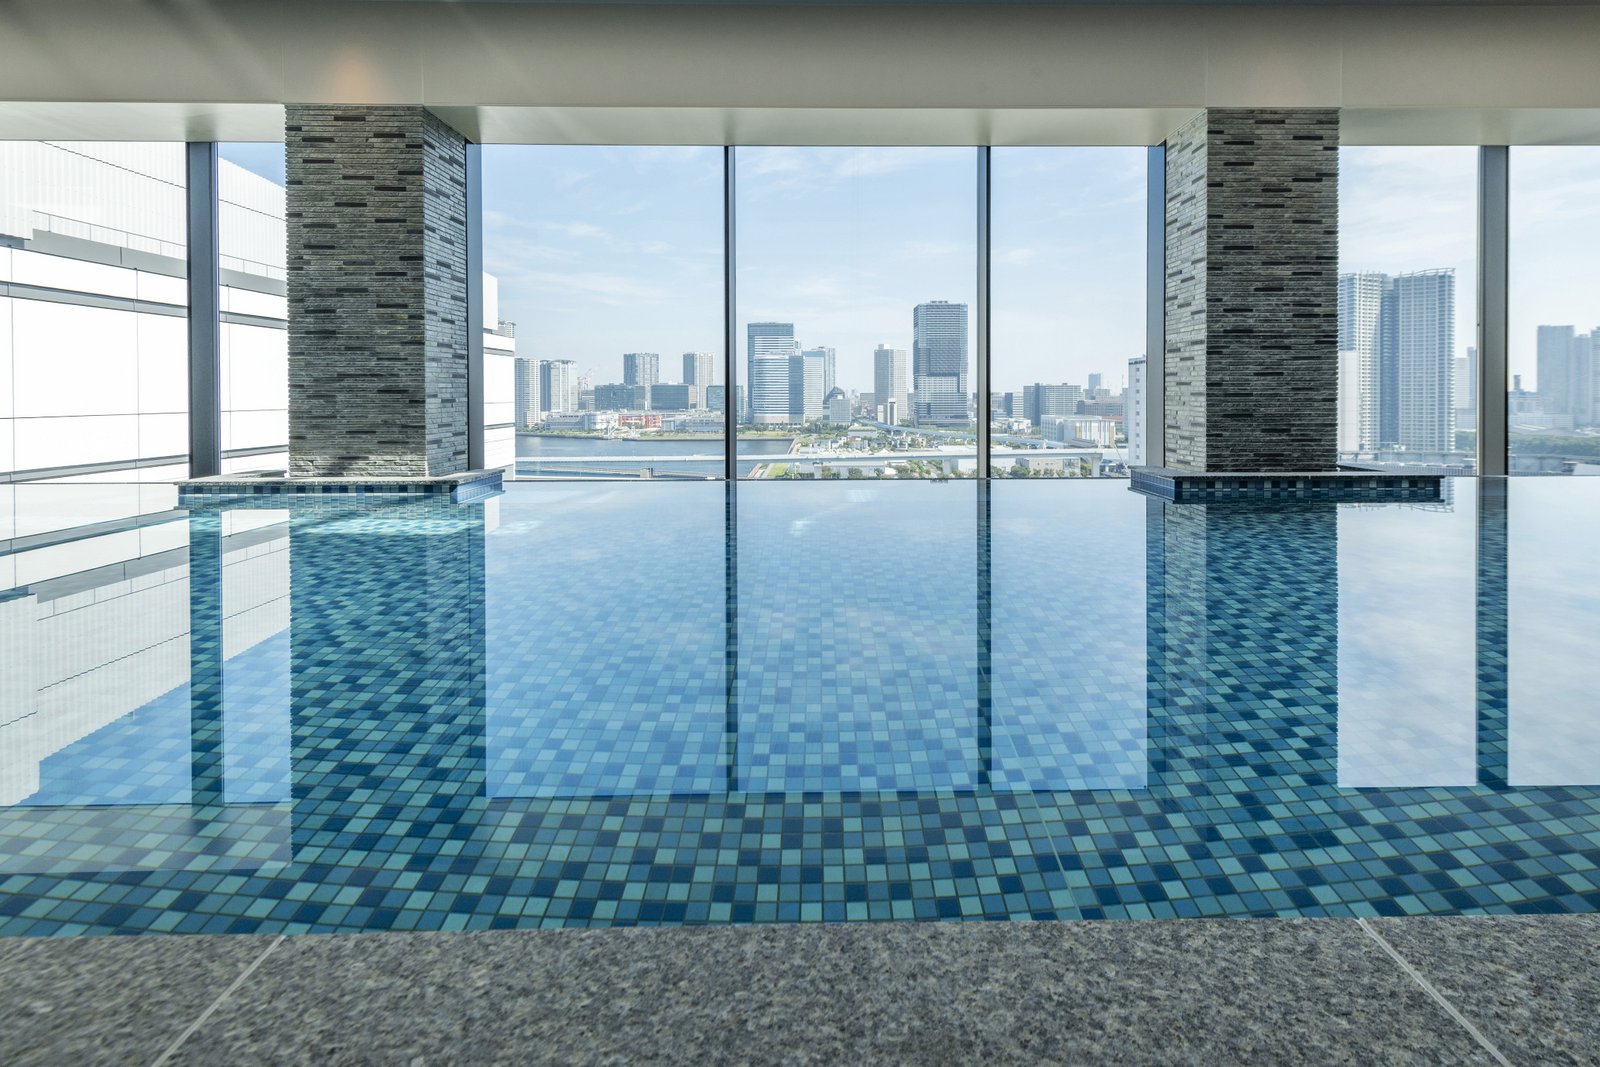 Urban Resort Hotel "La Vista Tokyo Bay" is Now Taking Reservations